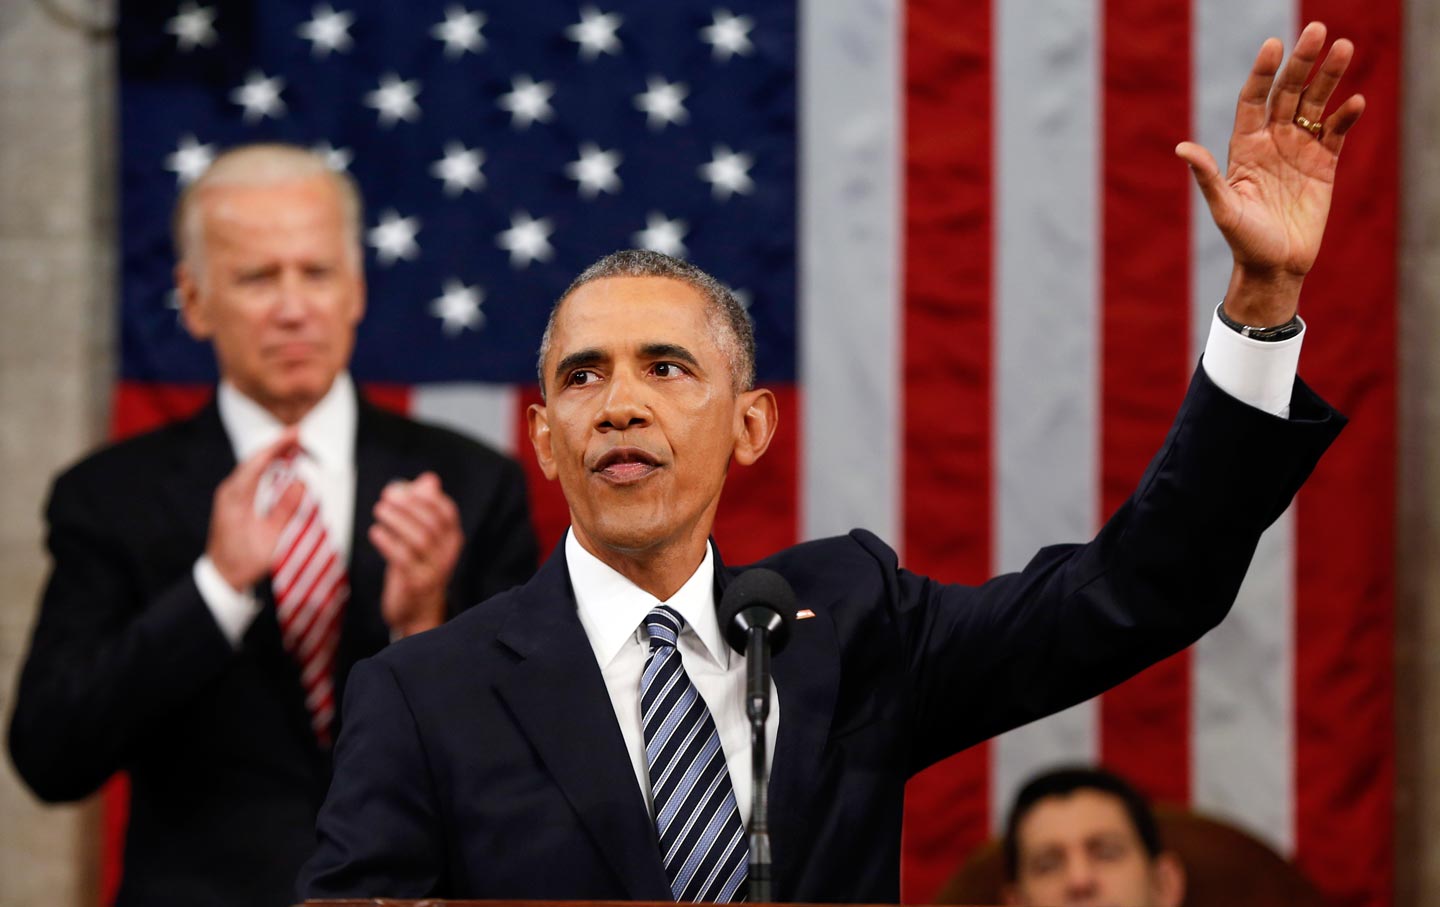 Obama waving at the SOTU